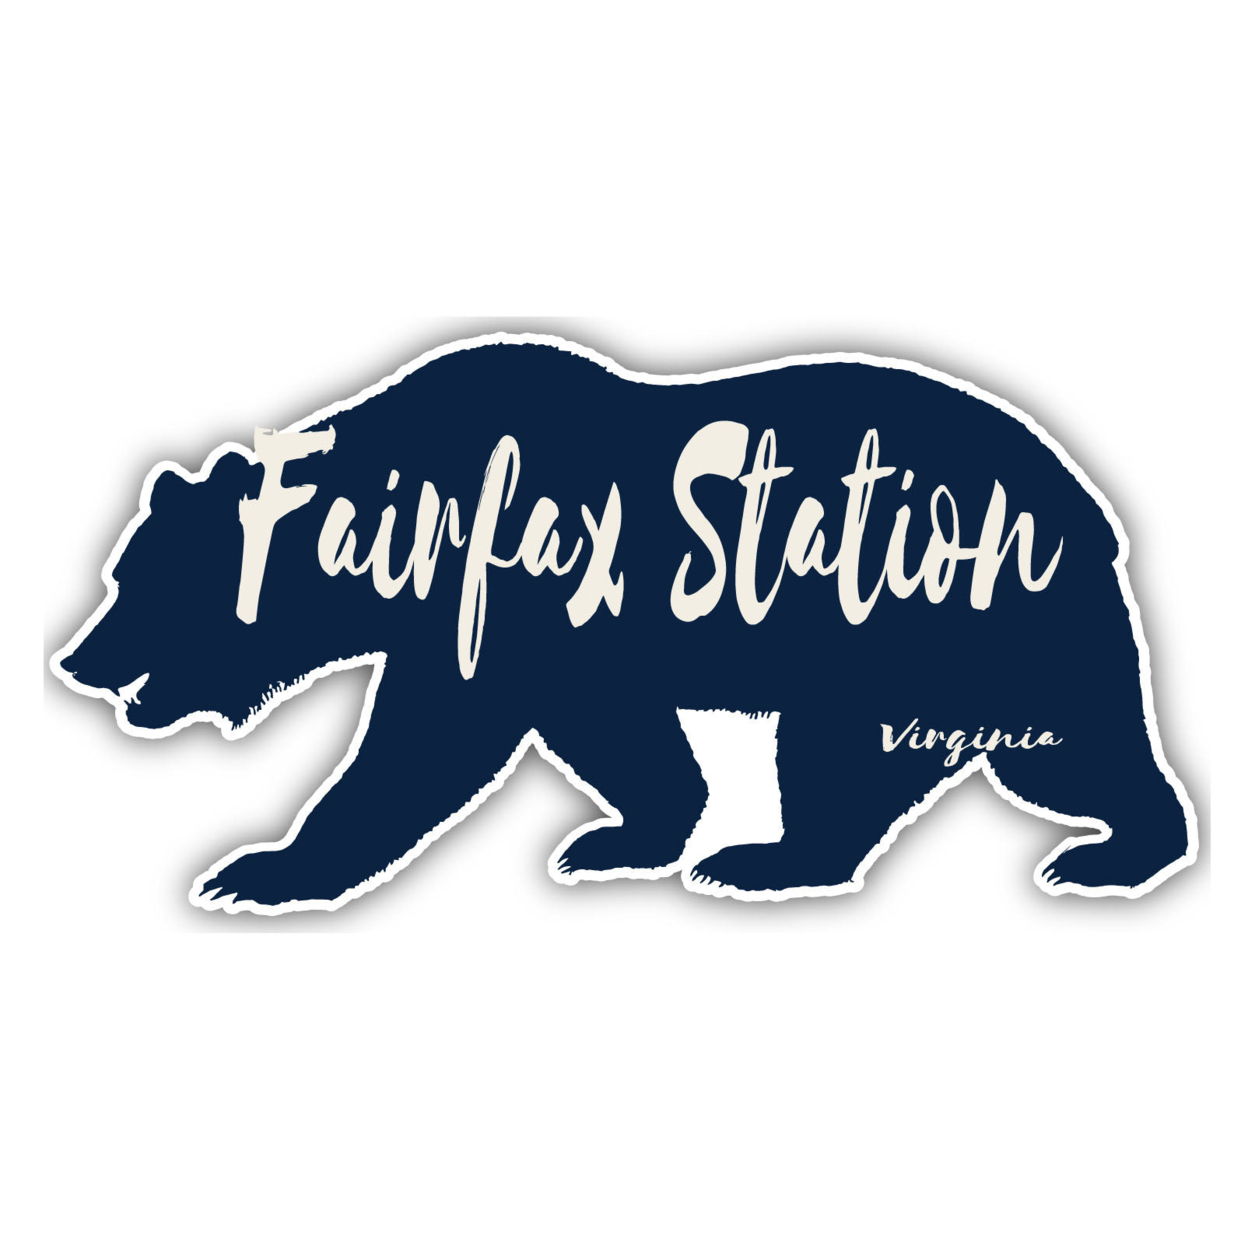 Fairfax Station Virginia Souvenir Decorative Stickers (Choose Theme And Size) - Single Unit, 10-Inch, Bear